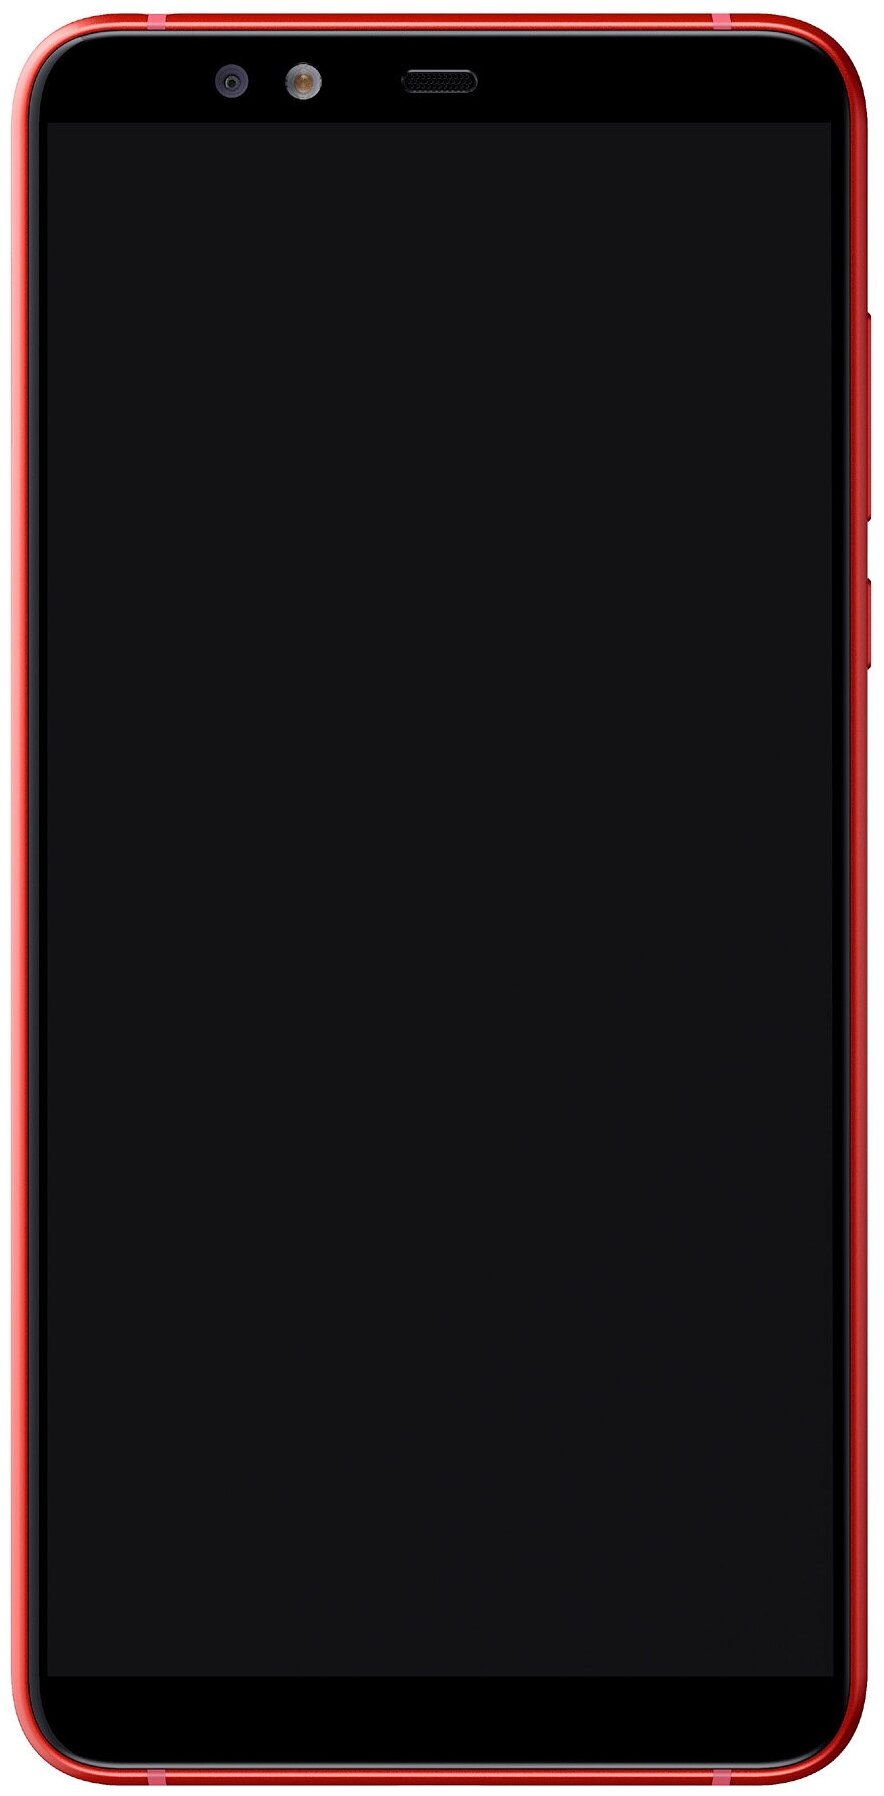 Смартфон yandex yndx-000sb (red) Yandex.Phone YNDX-000SBr 5.65" (1080x2160), SDM630 8x2.2Ghz (EightCore), 4096MB, 64GB, cam 16+5